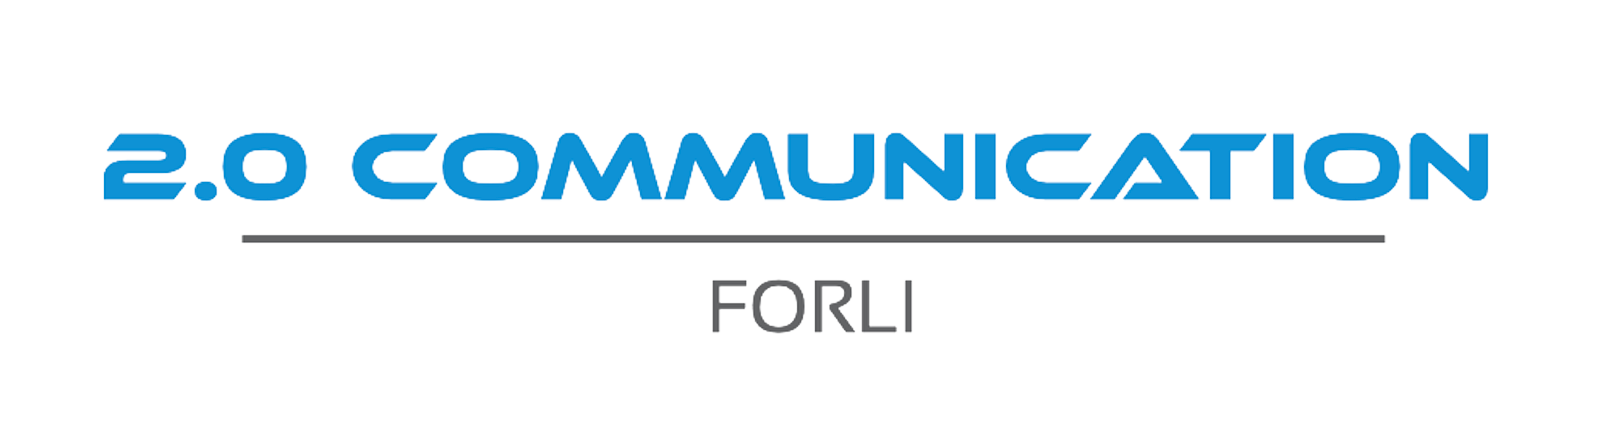 2.0 COMMUNICATION - Forlì